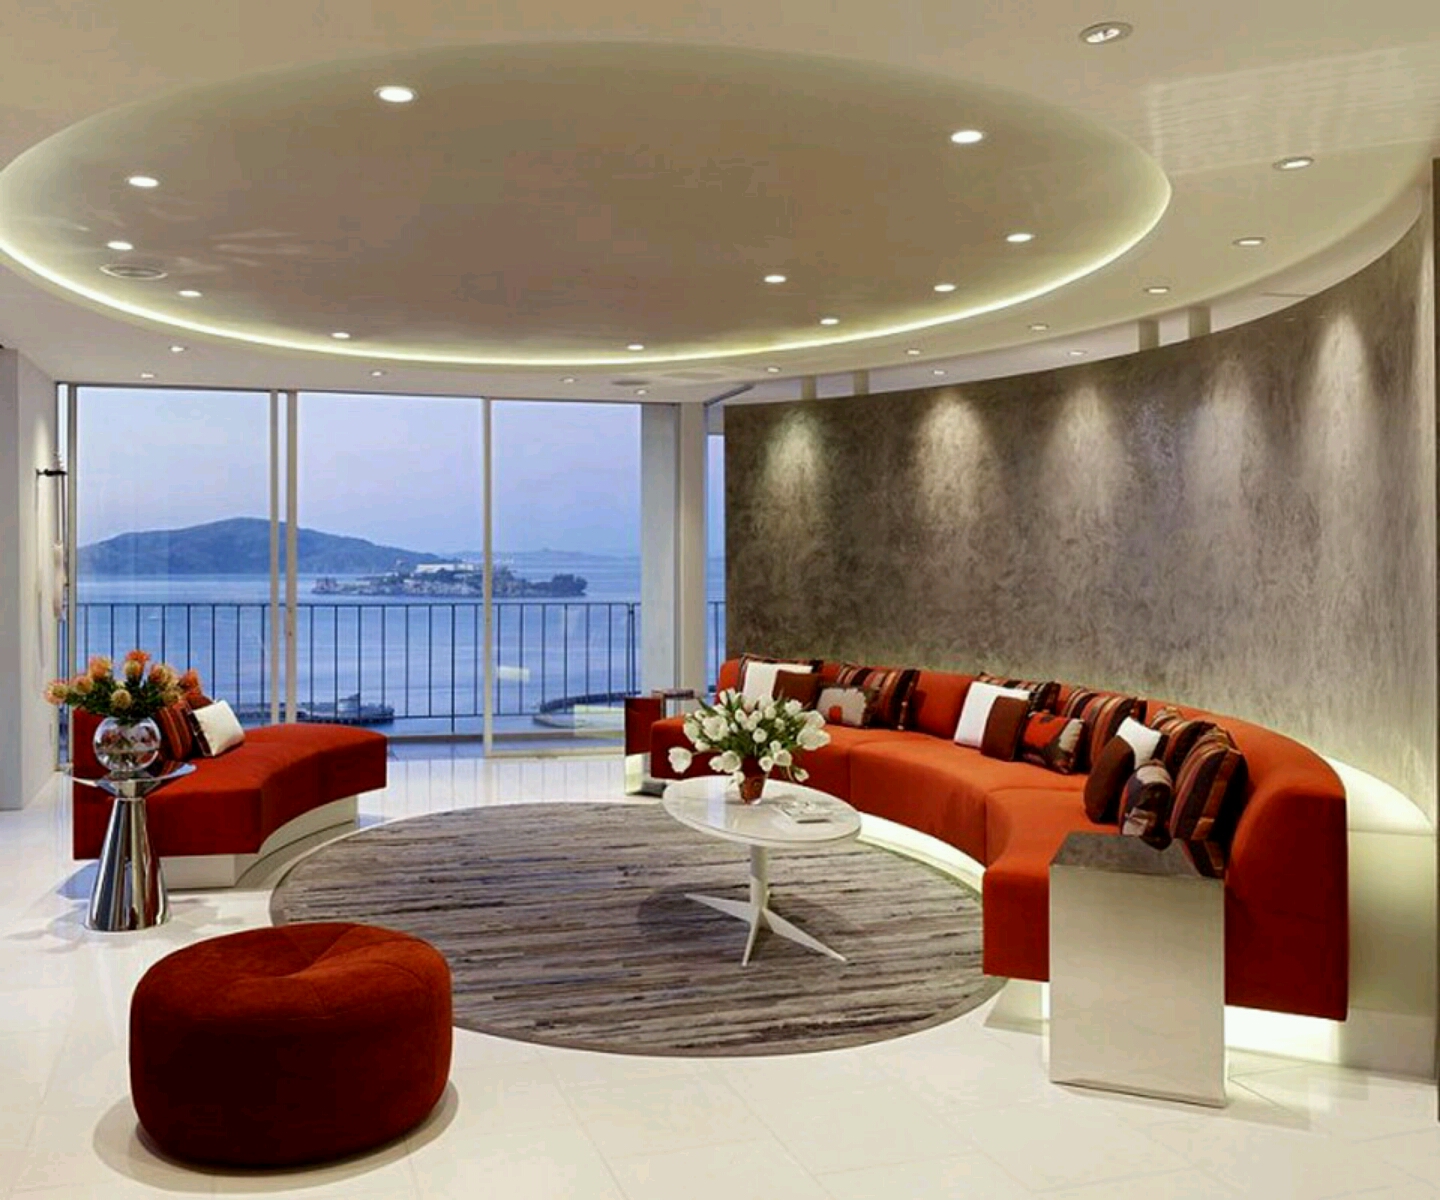 Desain Rumah Minimalis: Modern interior decoration living rooms ...